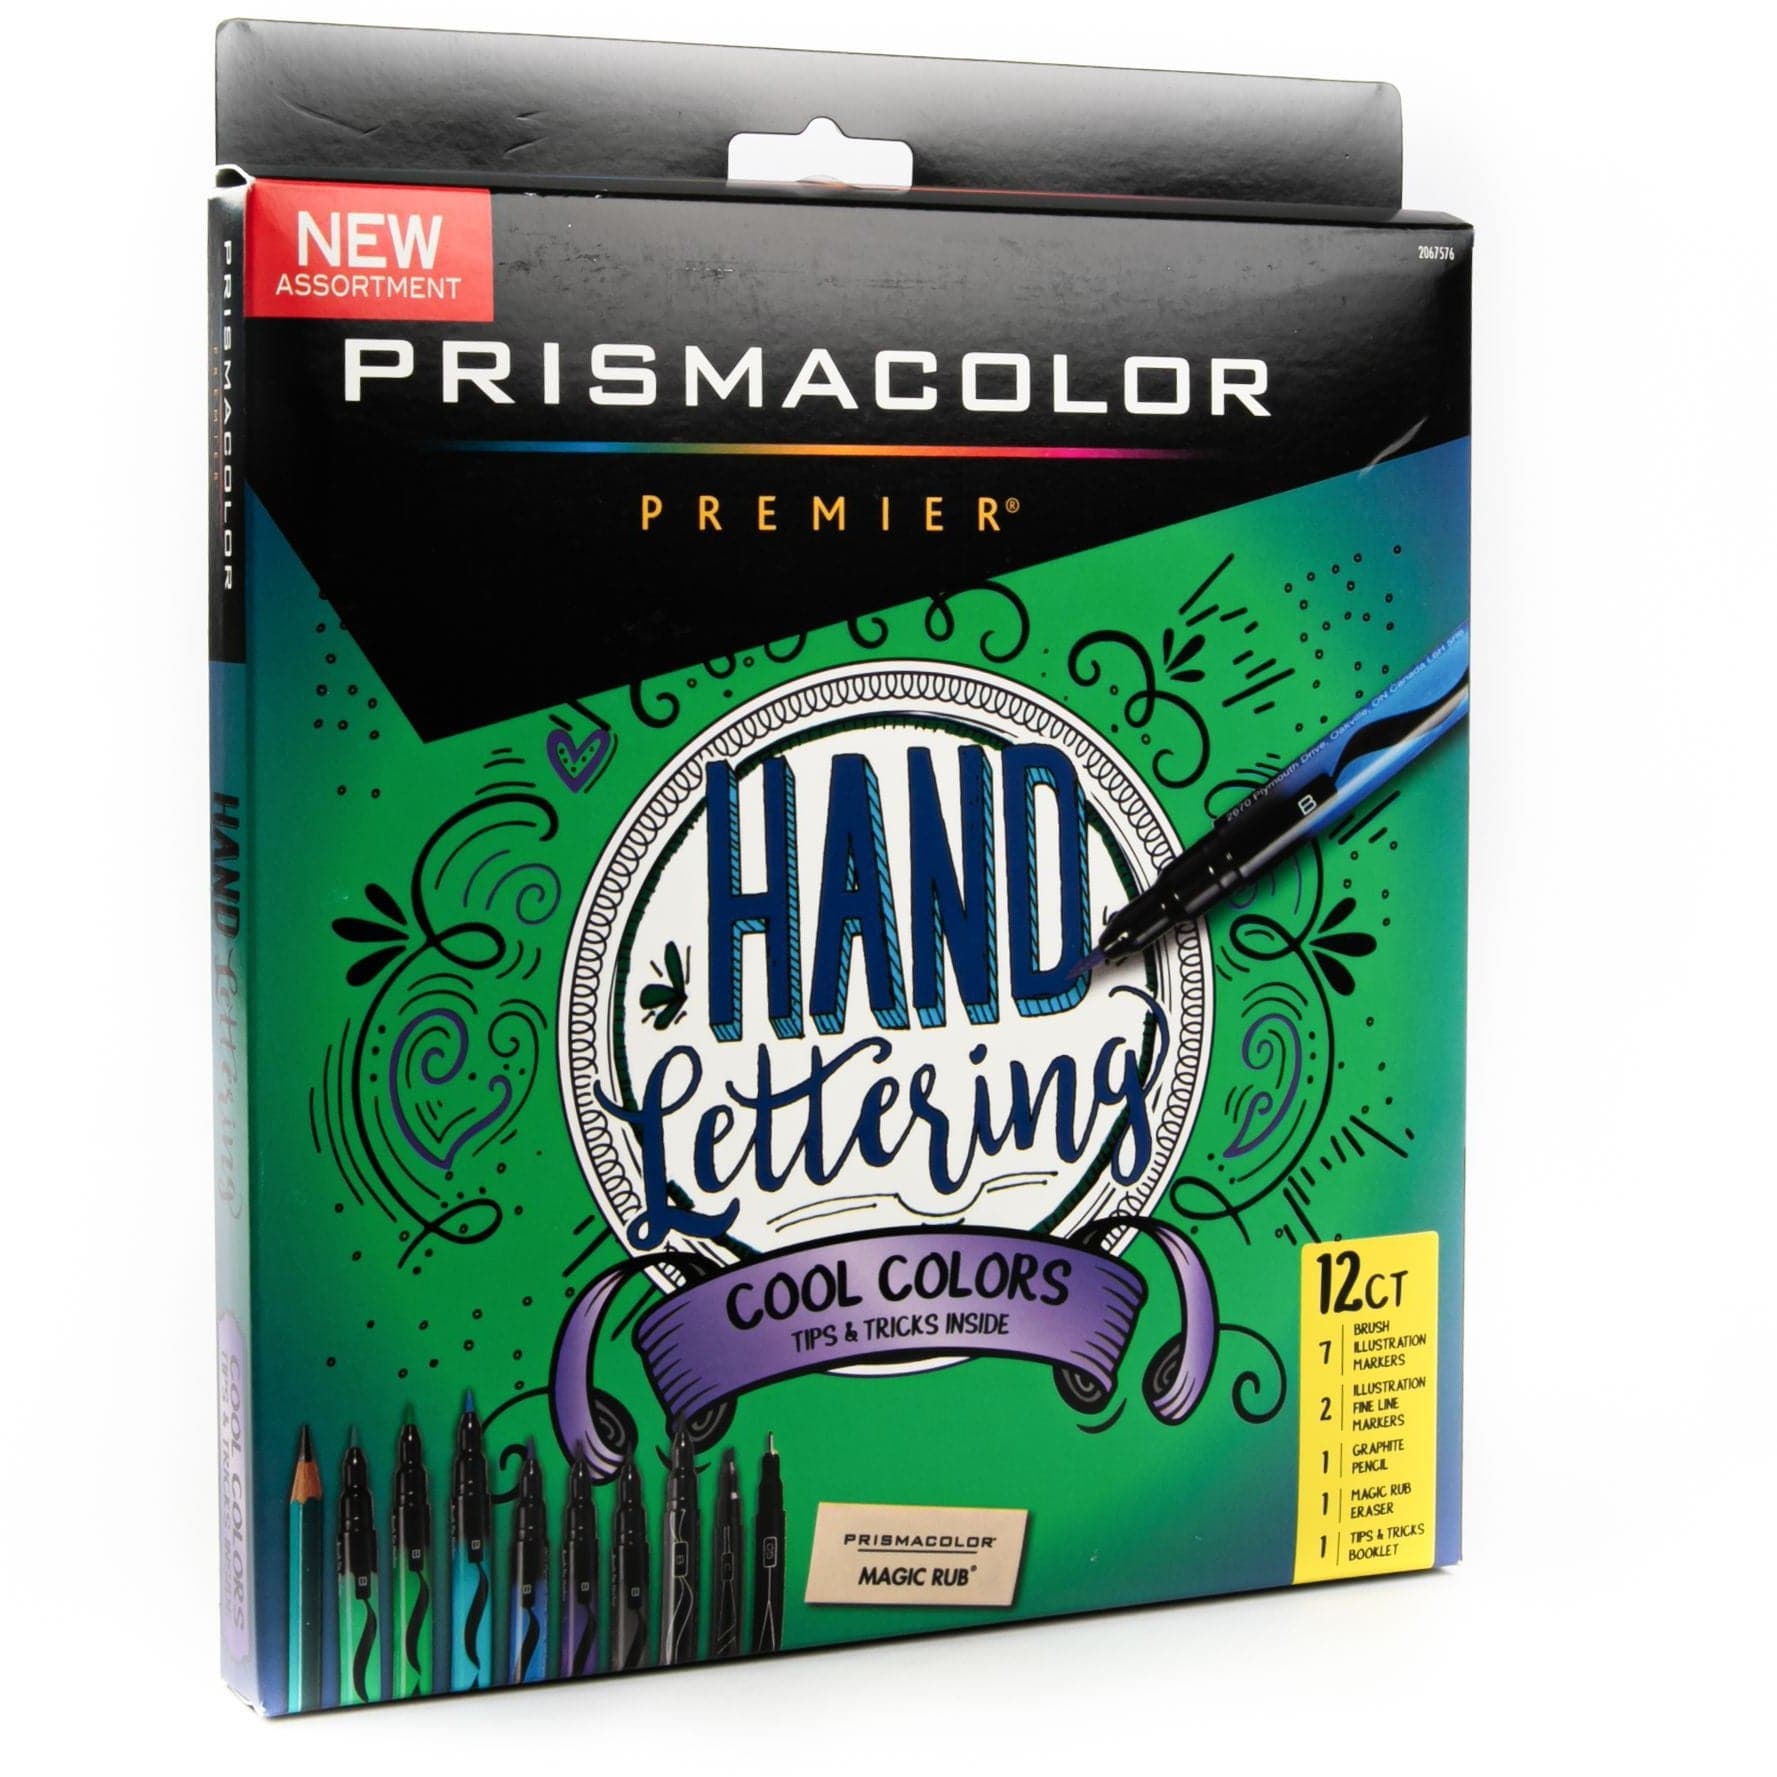 Shop Online for Prismacolor Premier Hand Lettering Set 12/Pkg-Cool Colors  956